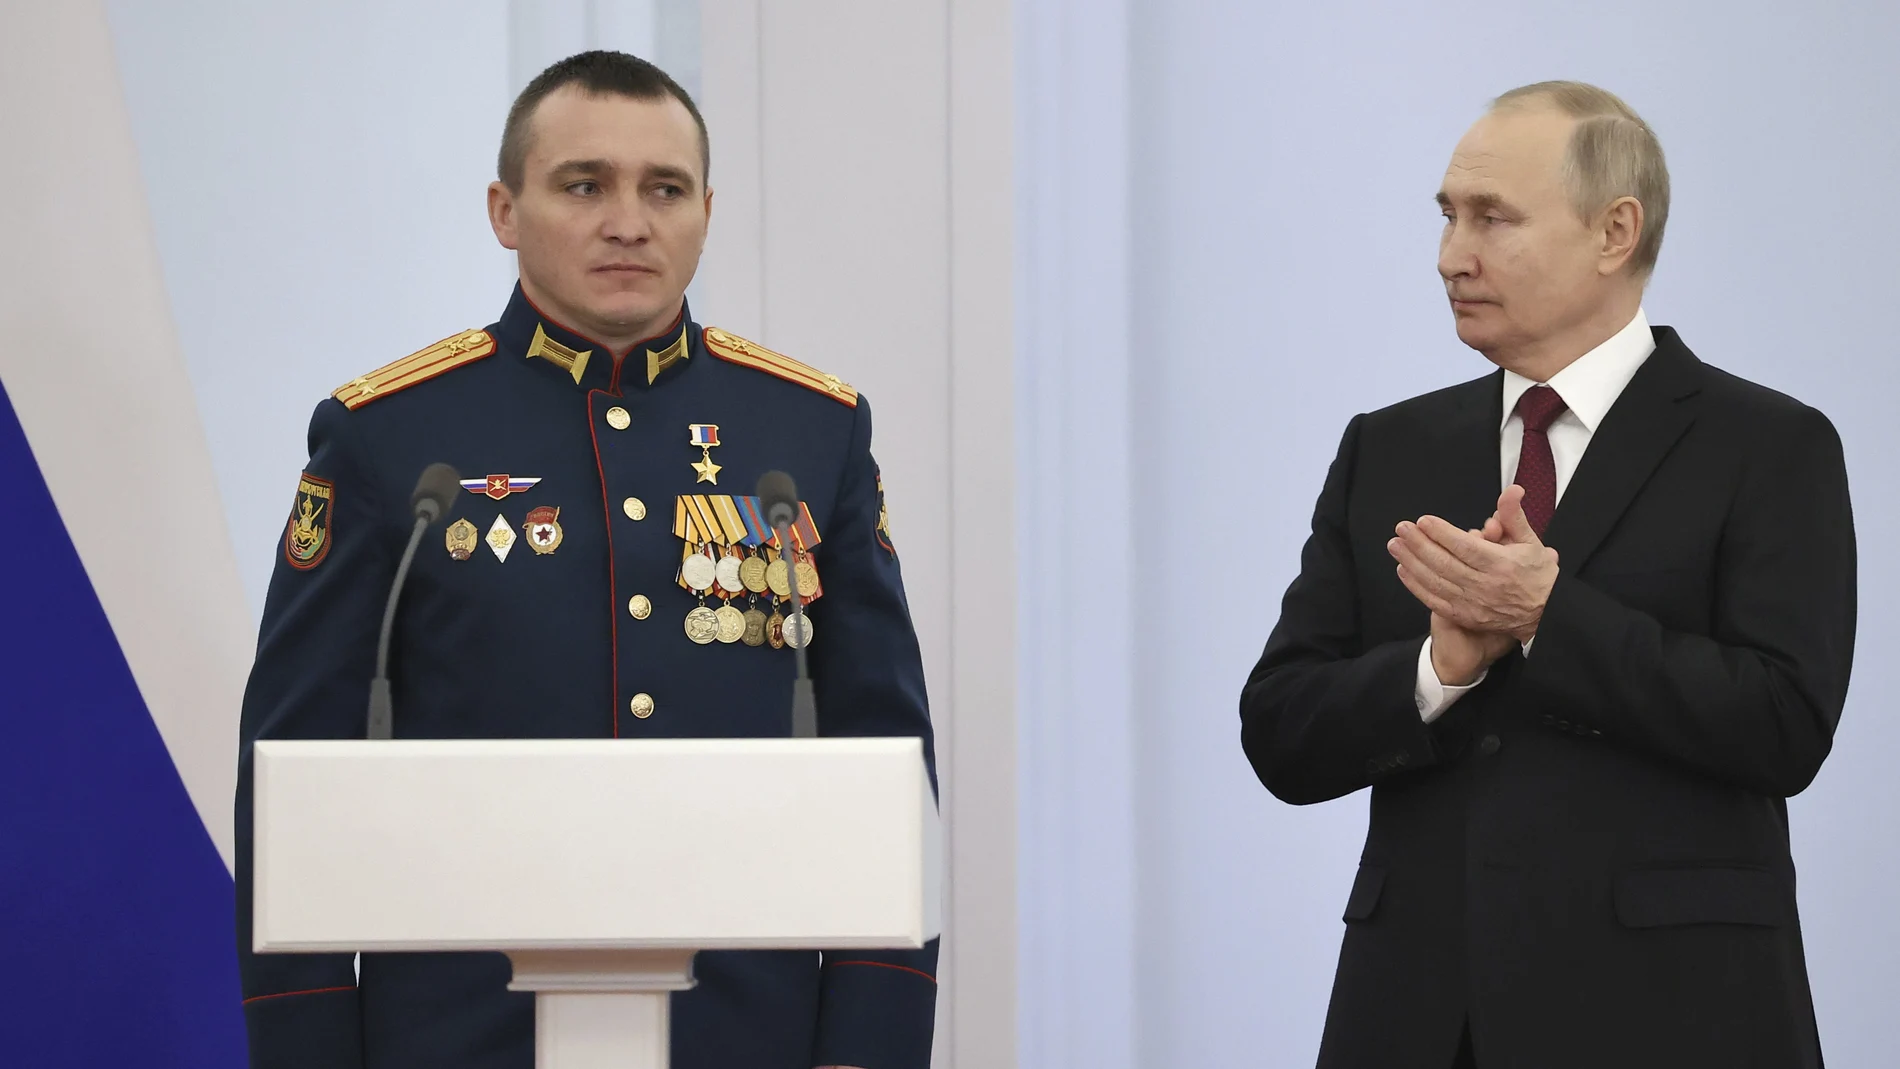 El presidente ruso, Vladimir Putin, aplaude al gerenal Alexander Zavadsky